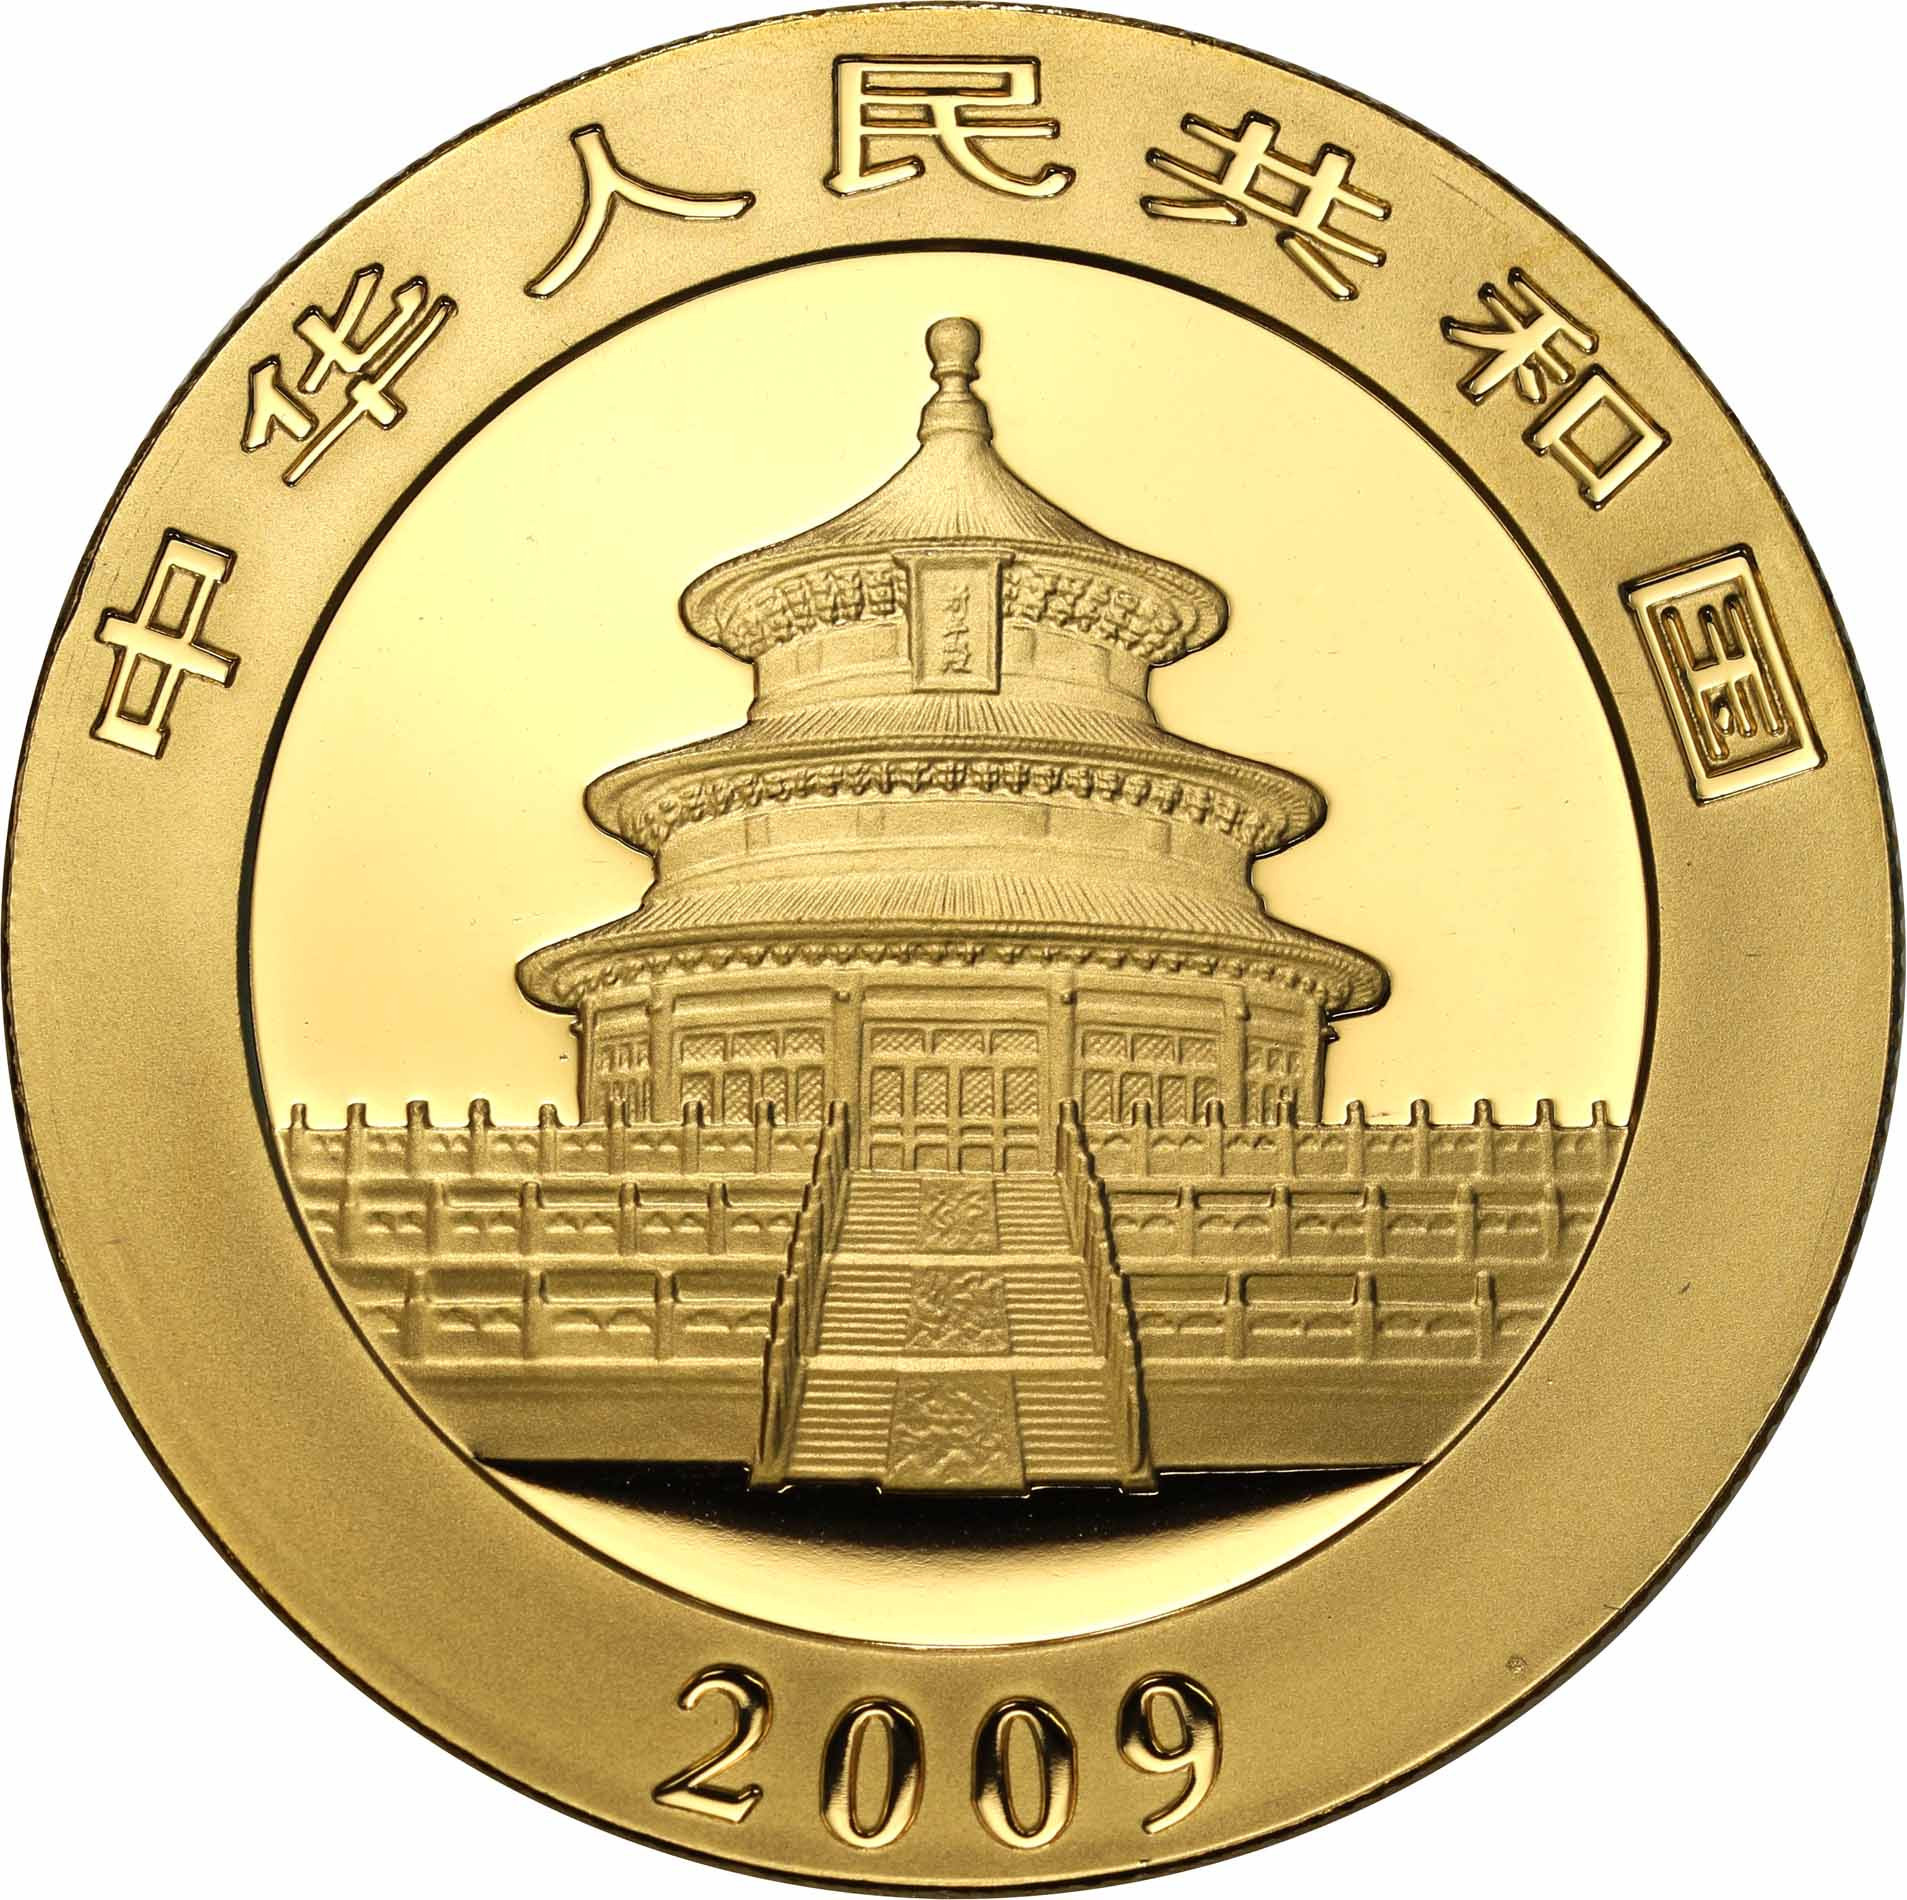 Chiny 500 Yuan (juanów) 2009 Panda Wielka 1 UNCJA złota